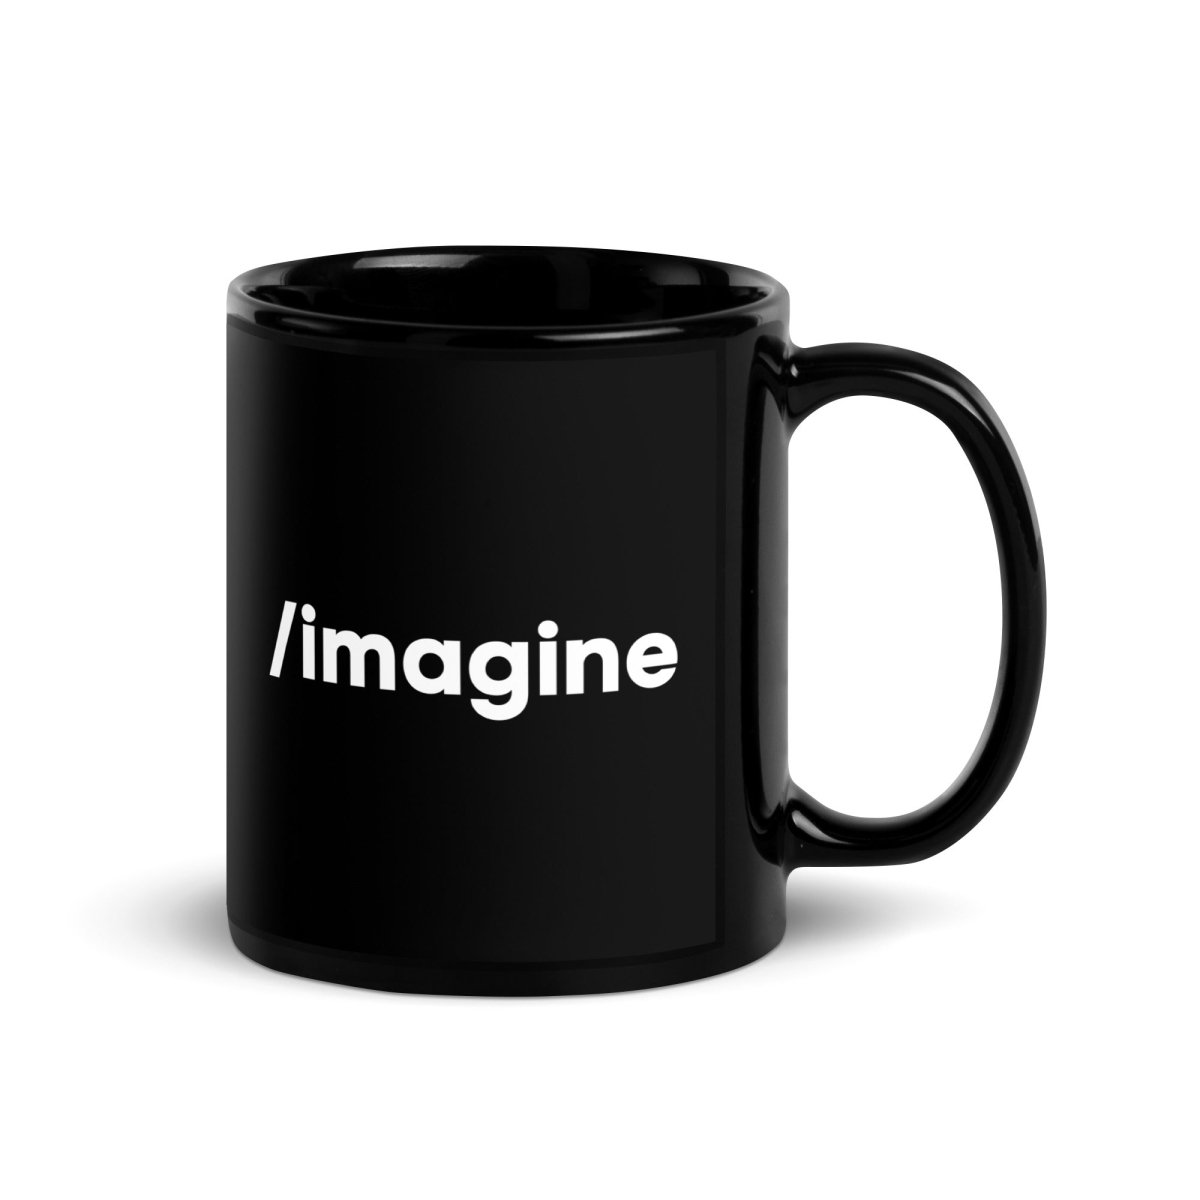 Midjourney /imagine Prompt Black Glossy Mug - AI Store